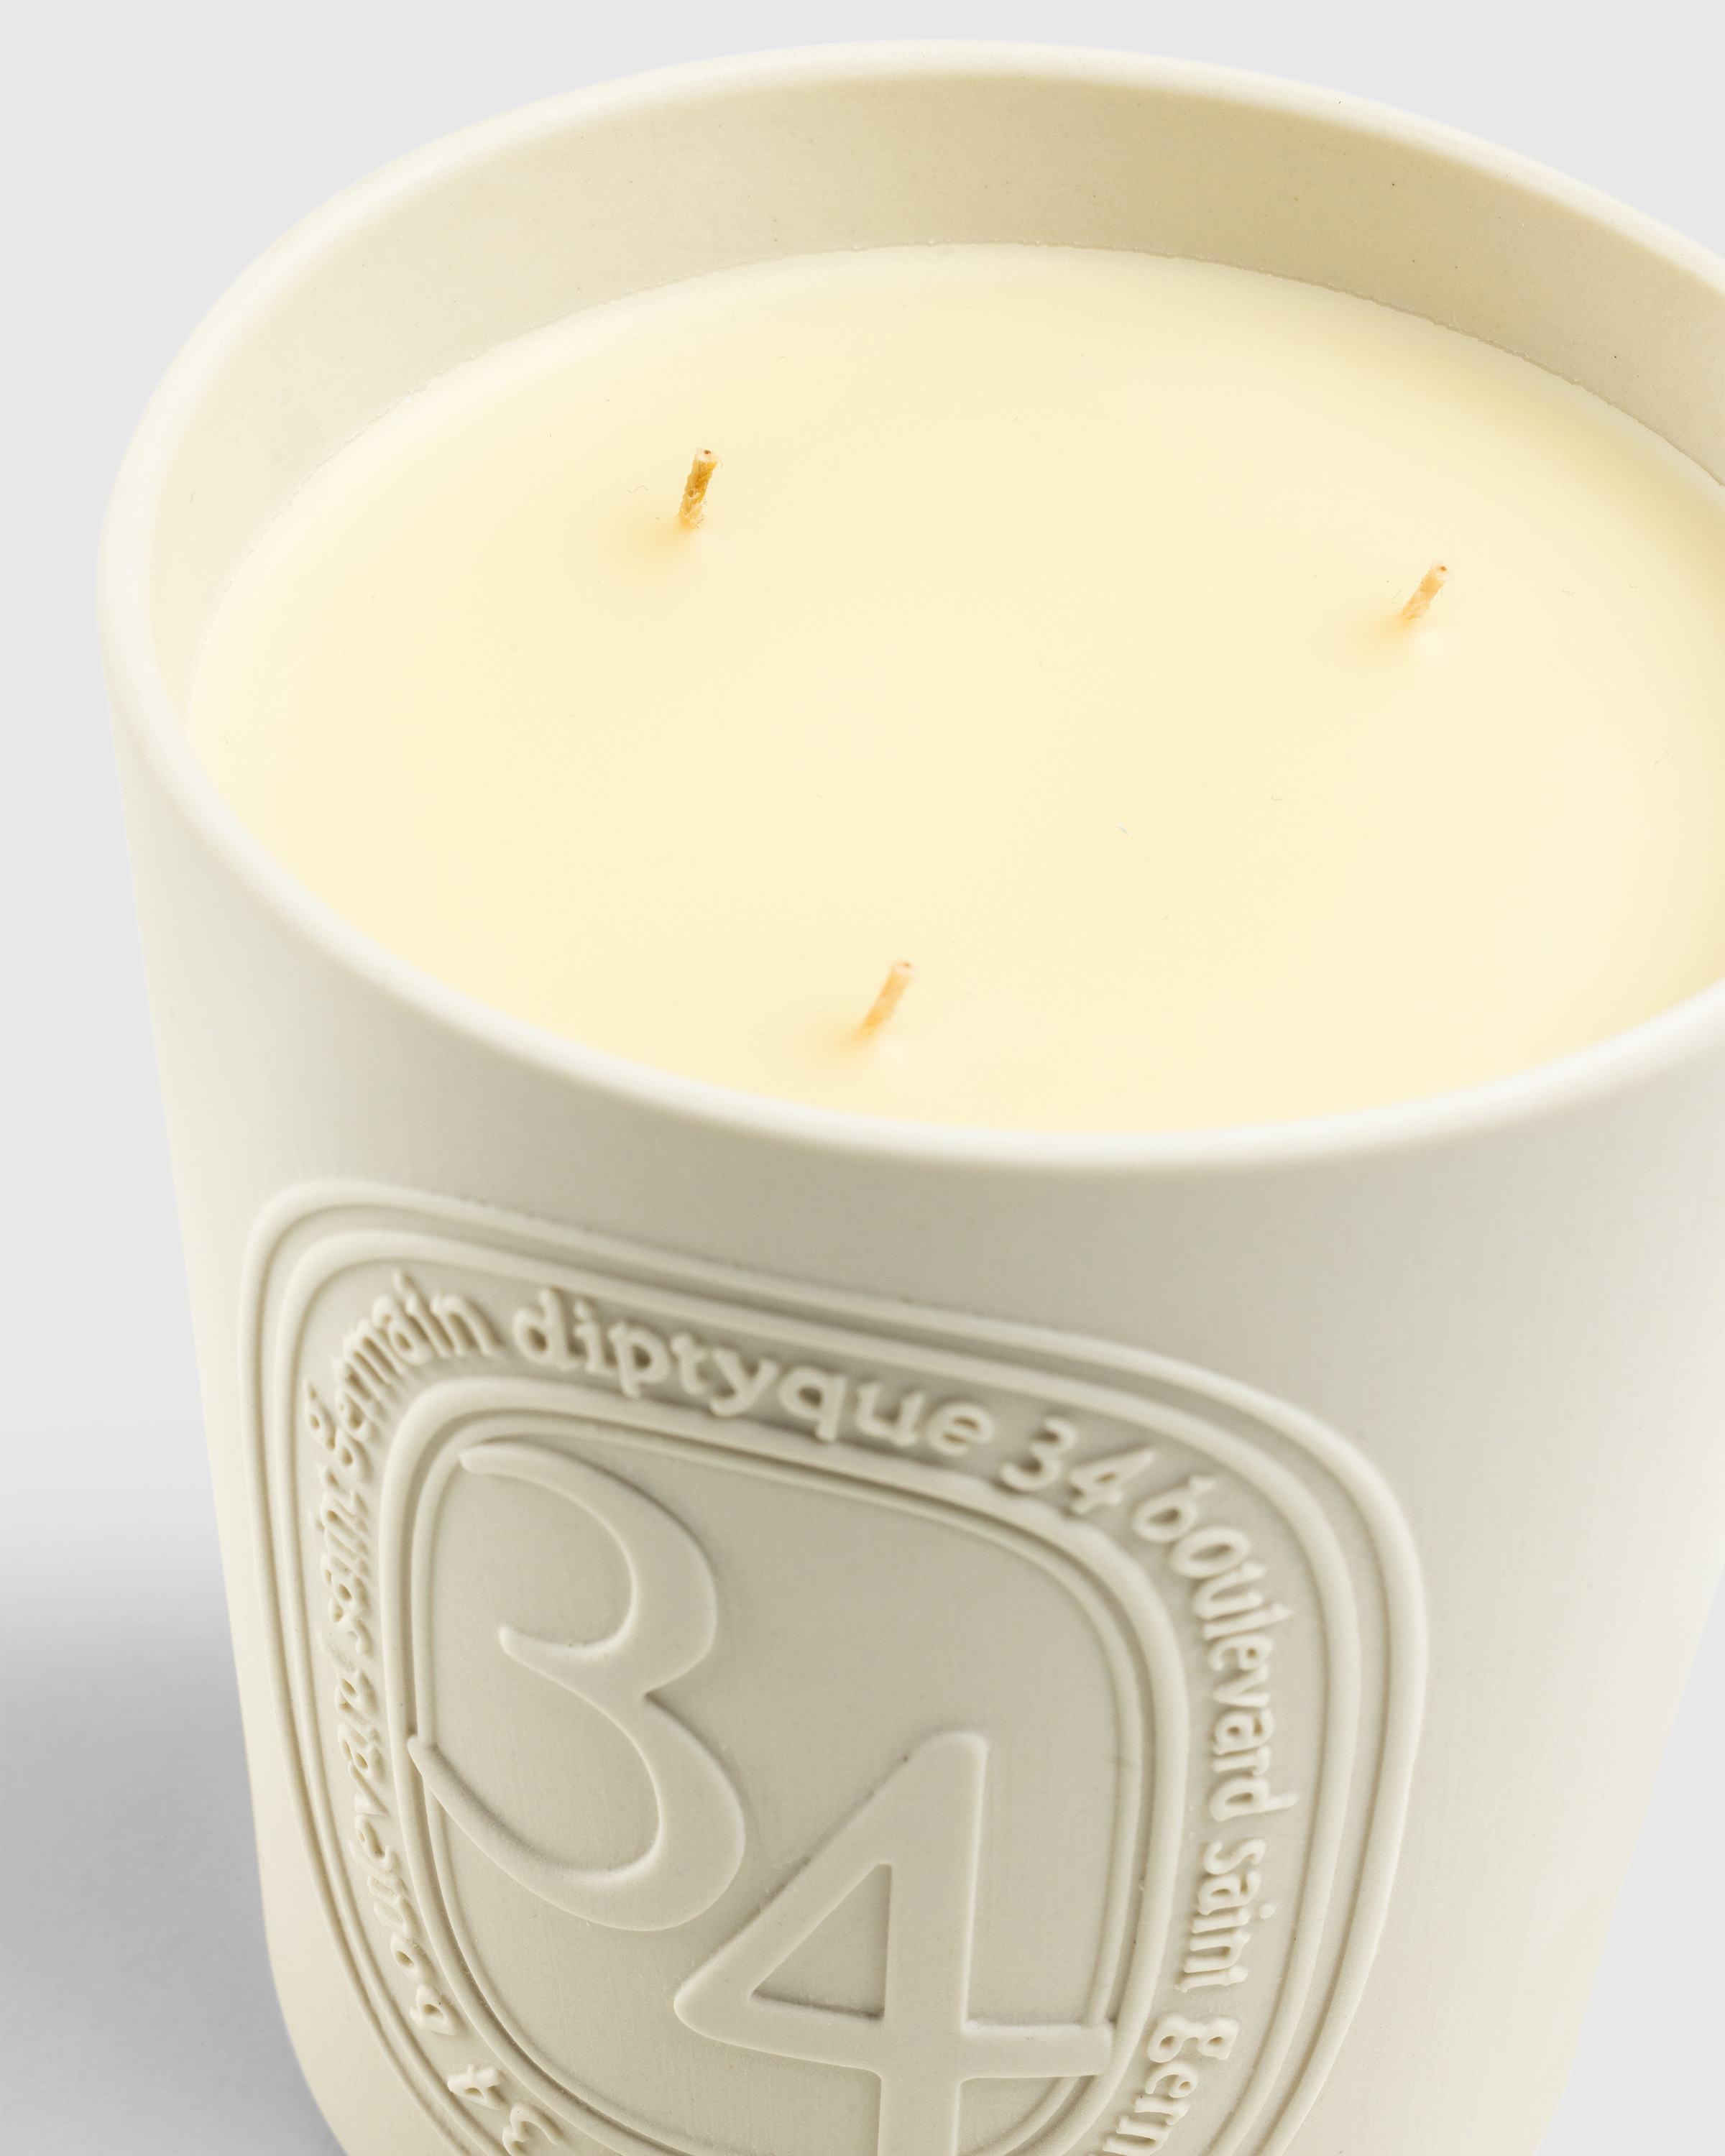 Diptyque – Candle 34 Boulevard Saint-Germain 600g - Candles & Fragrances - White - Image 2